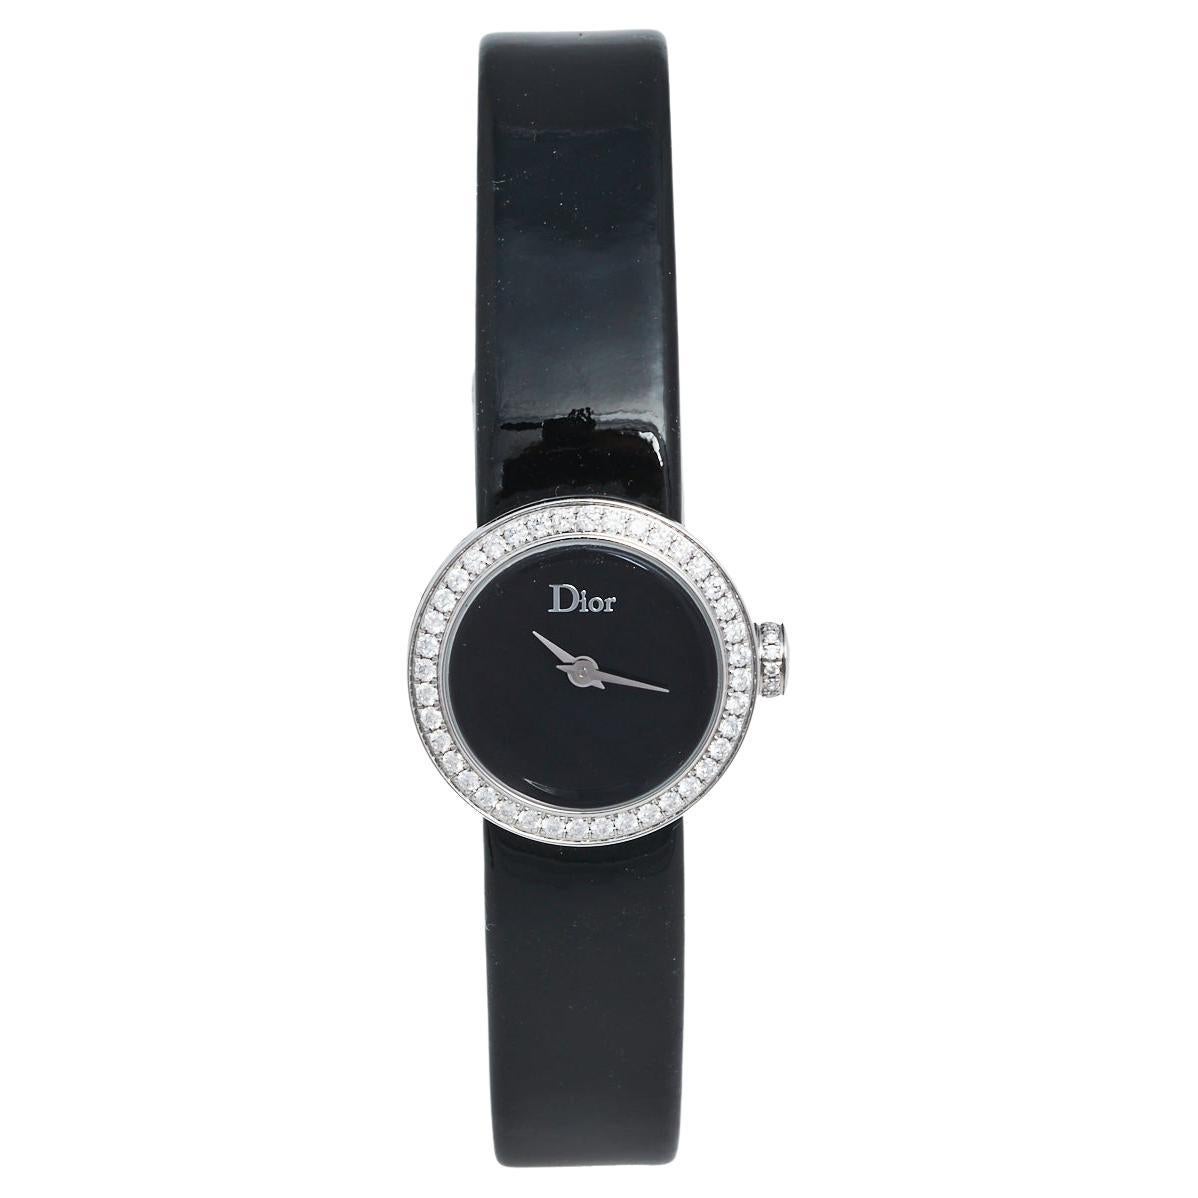 D De Dior Watch - 3 For Sale on 1stDibs